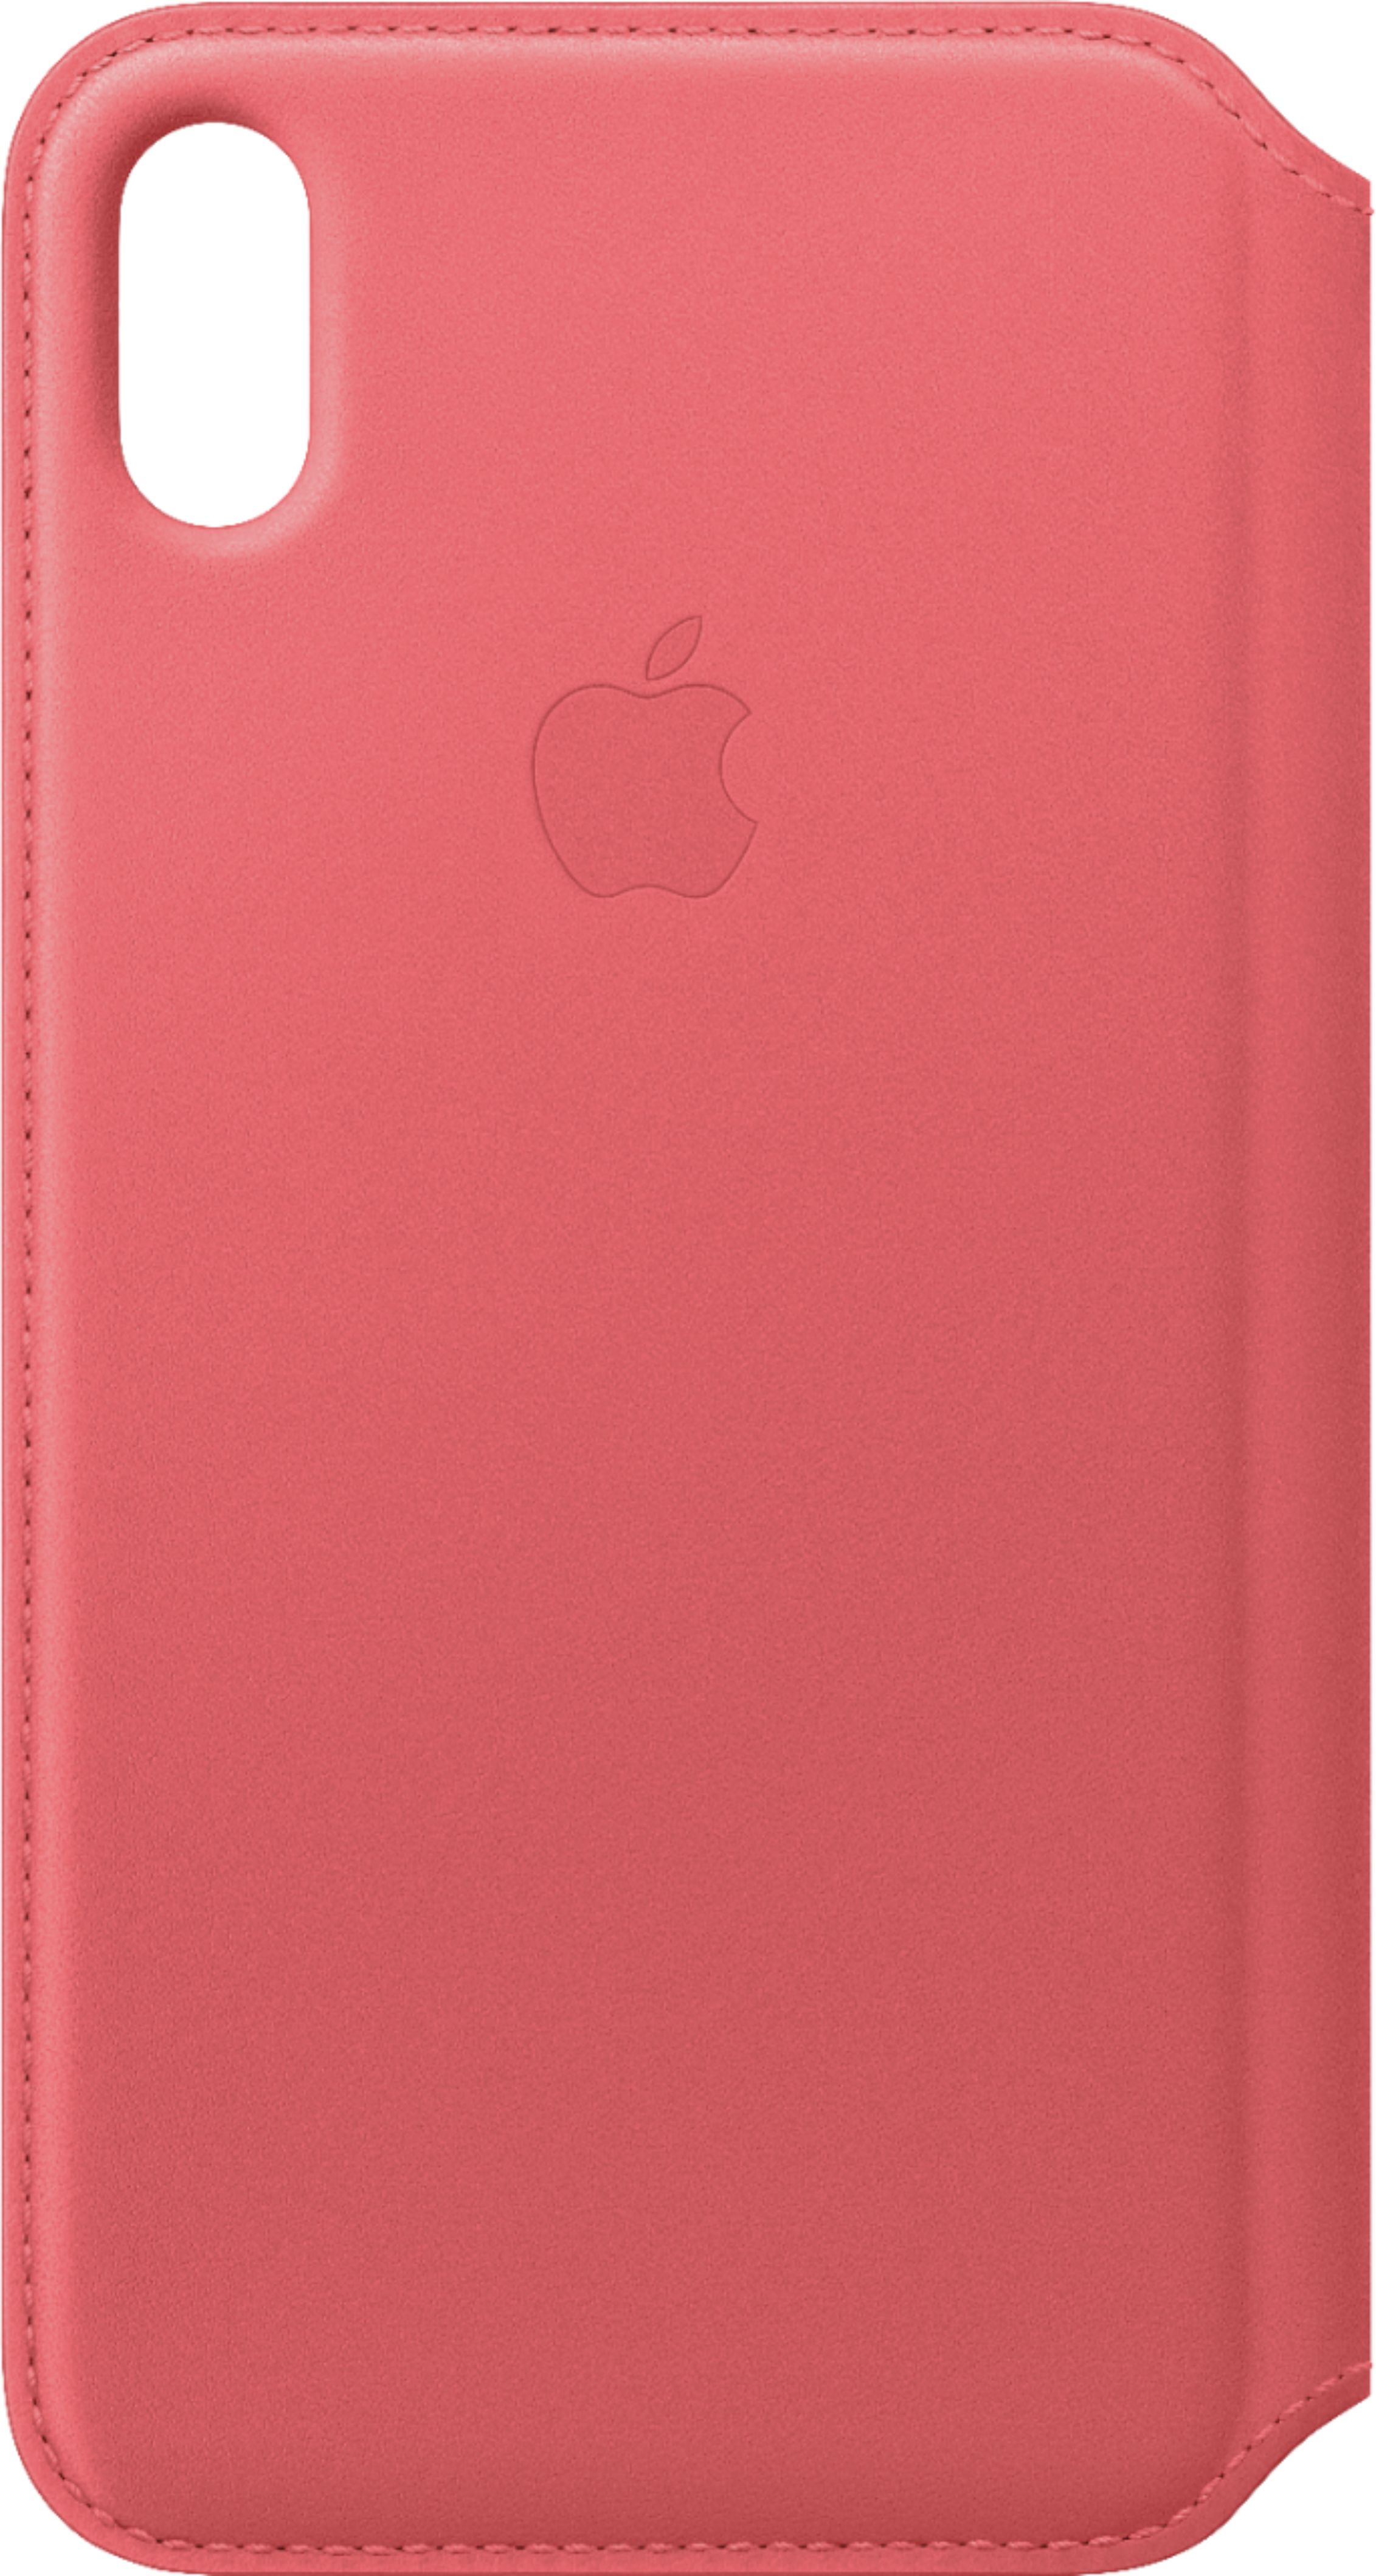 Apple - iPhone® XS Max Leather Folio - Peony Pink